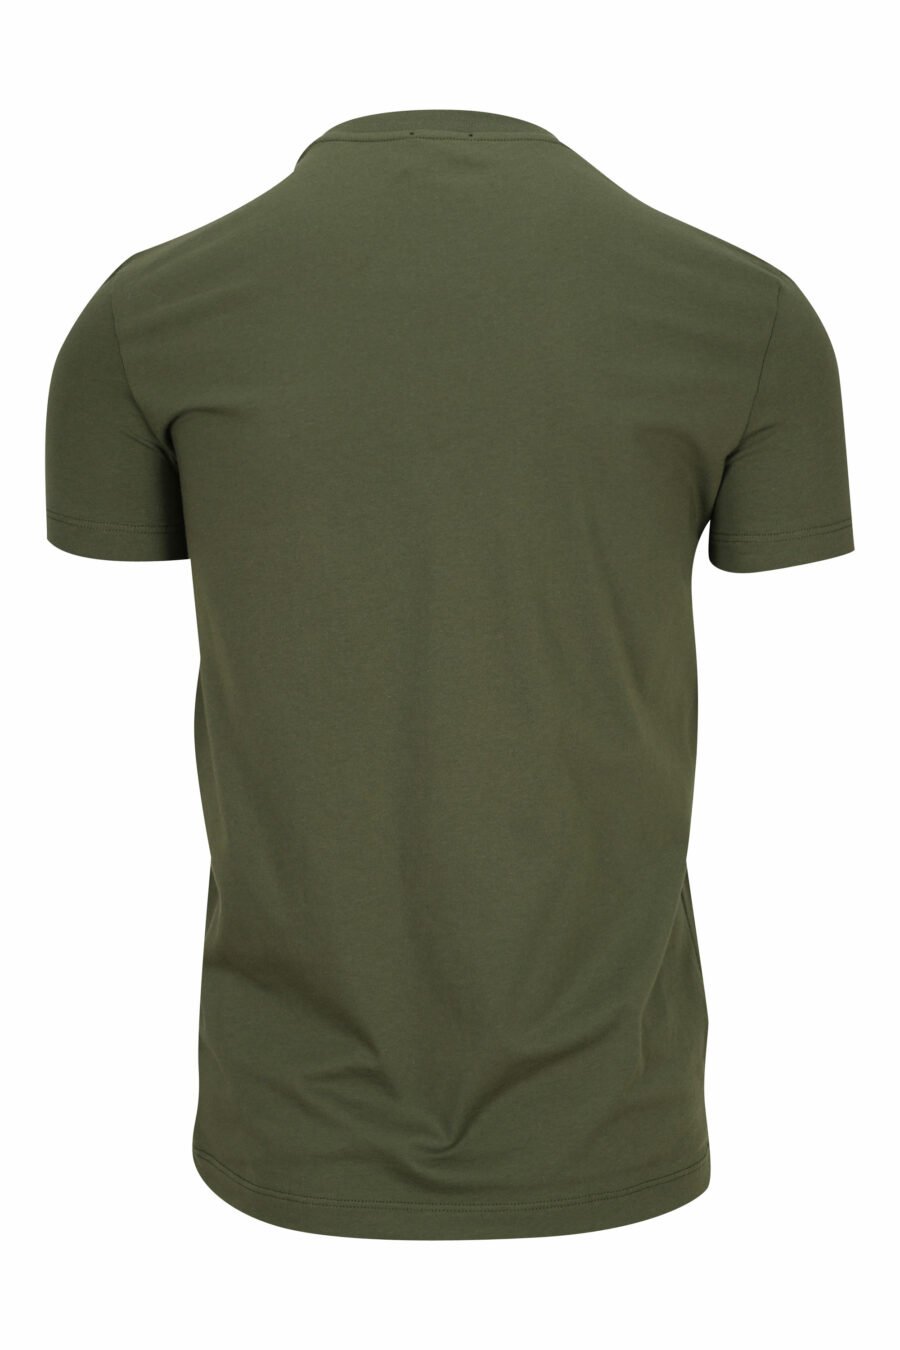 Camiseta verde militar con minilogo "underwear" blanco - 8032674811622 1